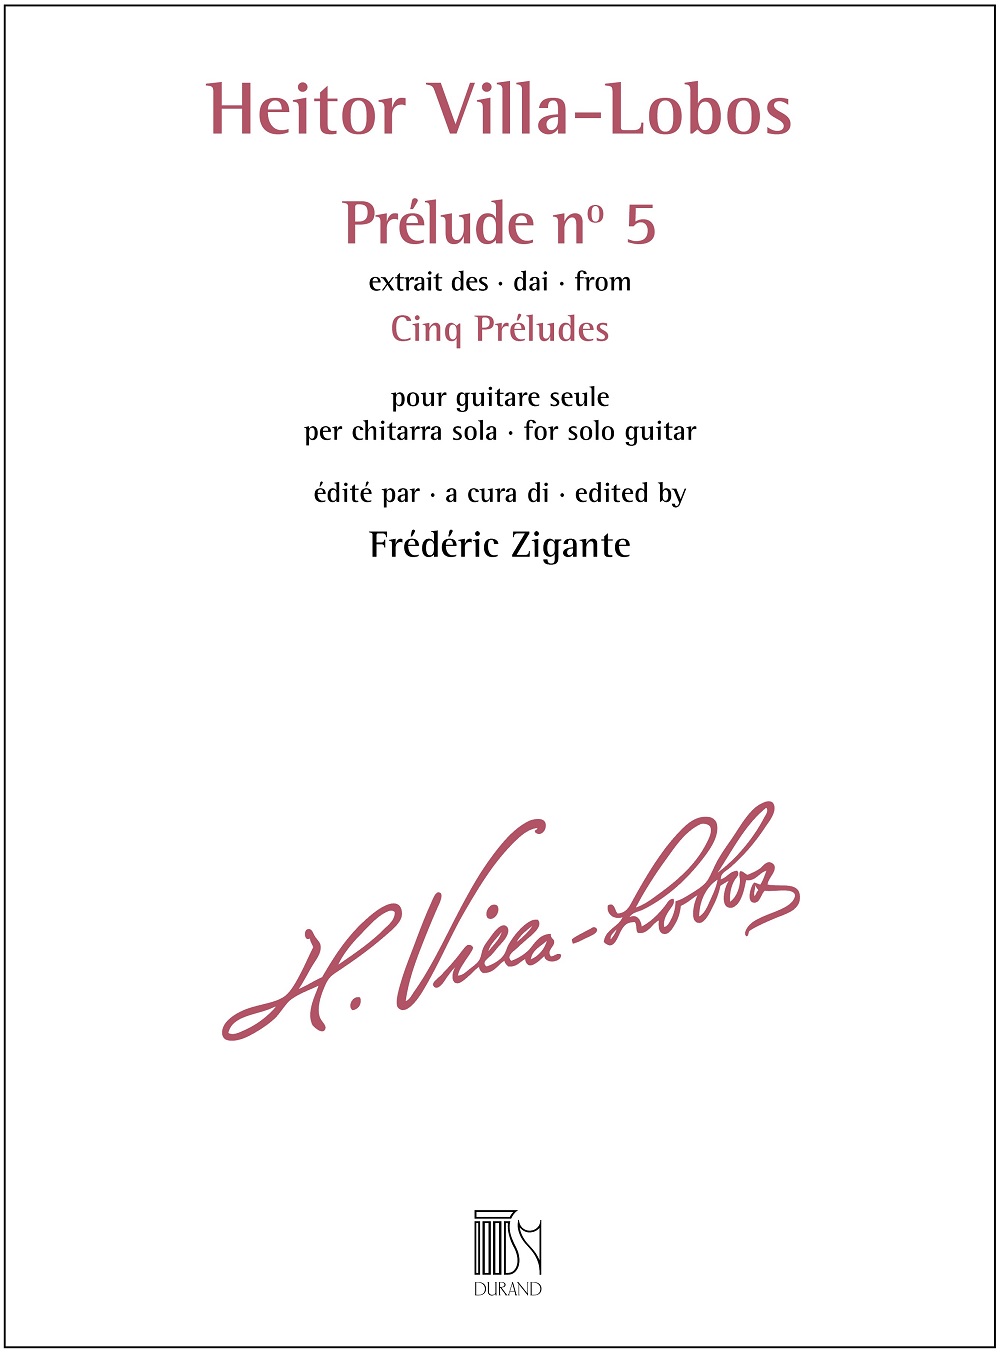 Heitor Villa-Lobos: Prlude n 5 - extrait des Cinq Prludes: Guitar: